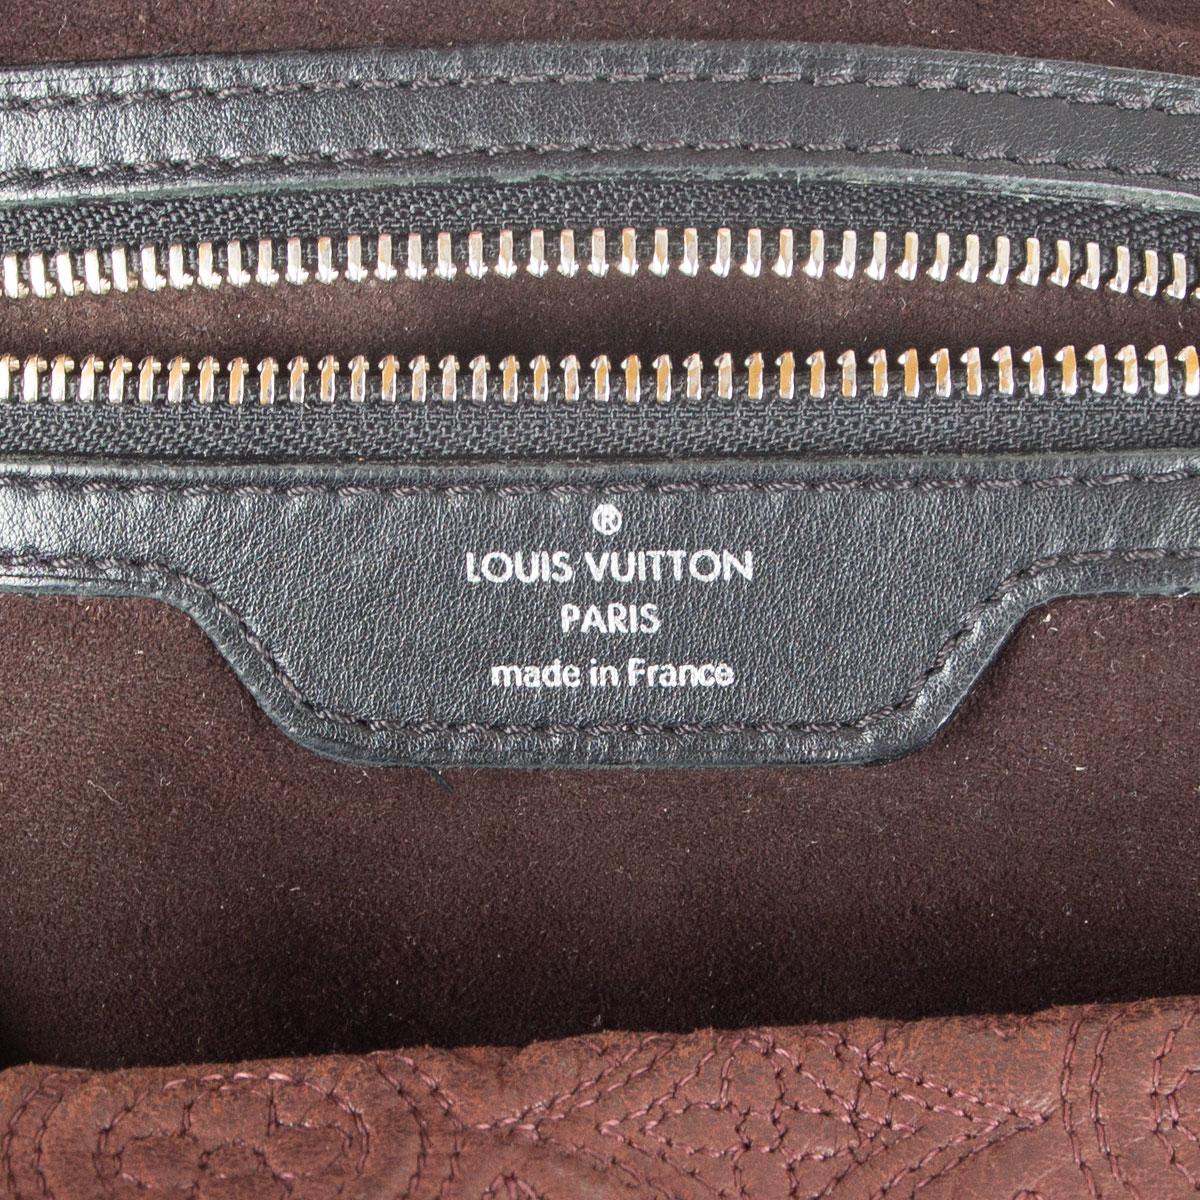 LOUIS VUITTON Chocolate brown leather MONOGRAM ANTHEIA PM HOBO Shoulder Bag 1